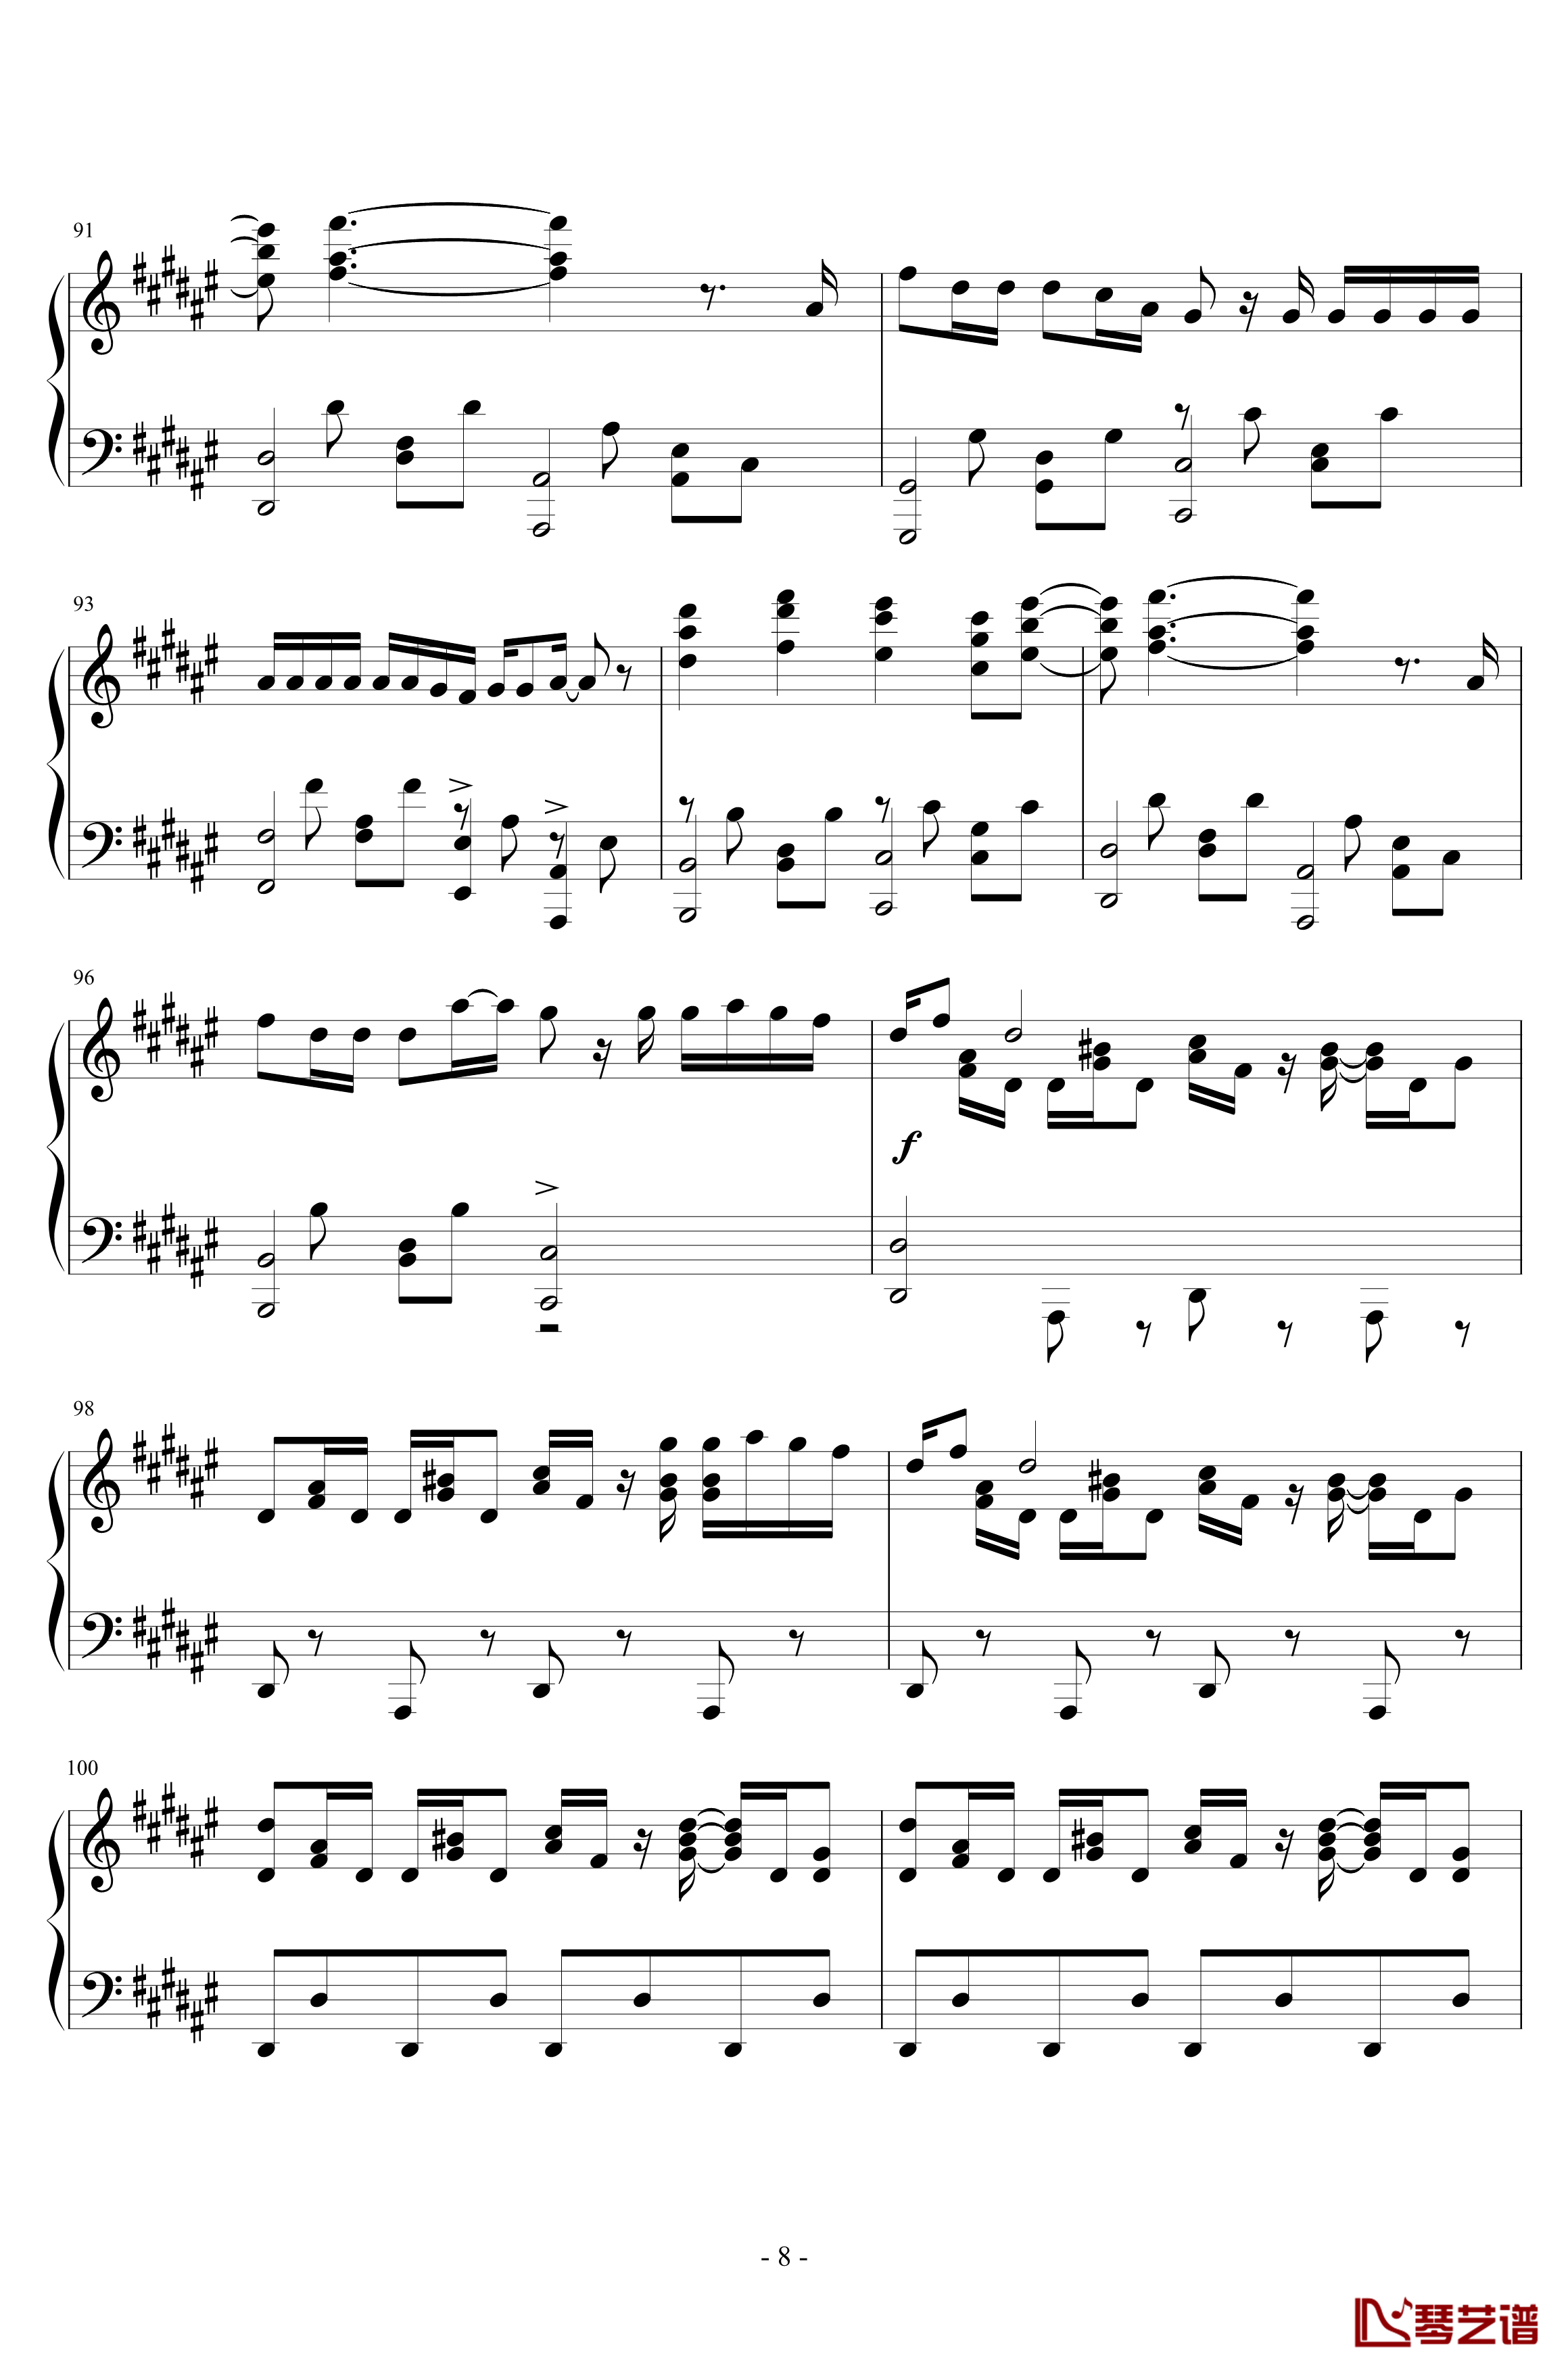 SNOBBISM钢琴谱 -Neru